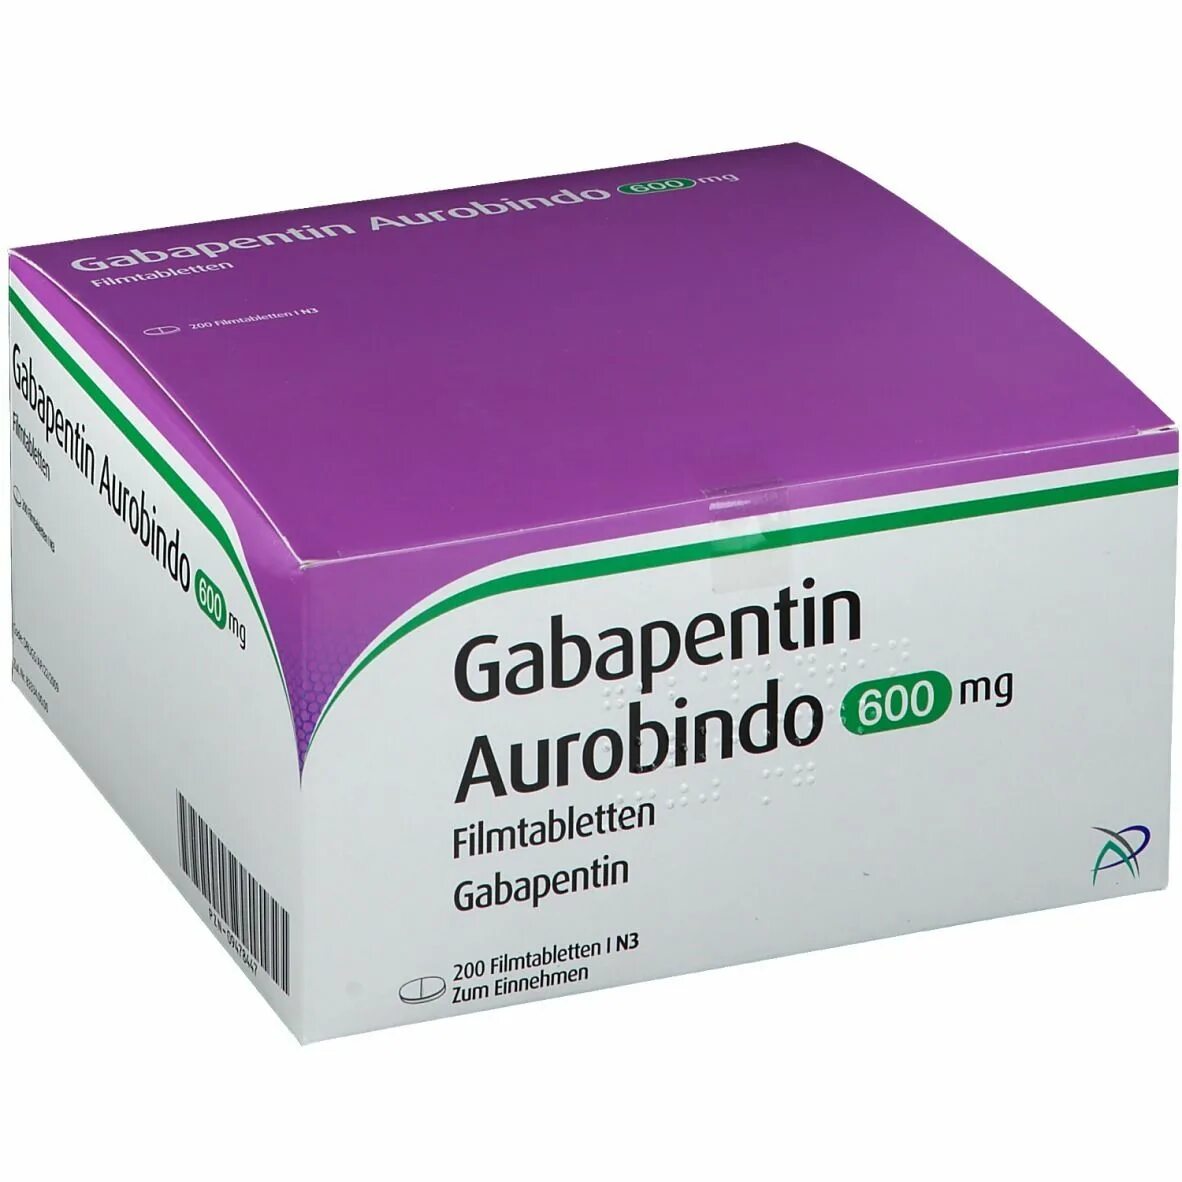 Габапентин 600 мг. Габапентин Нейронтин 600мг. Габапентин канон 600мг. Габапентин фото. Габапентин для собак